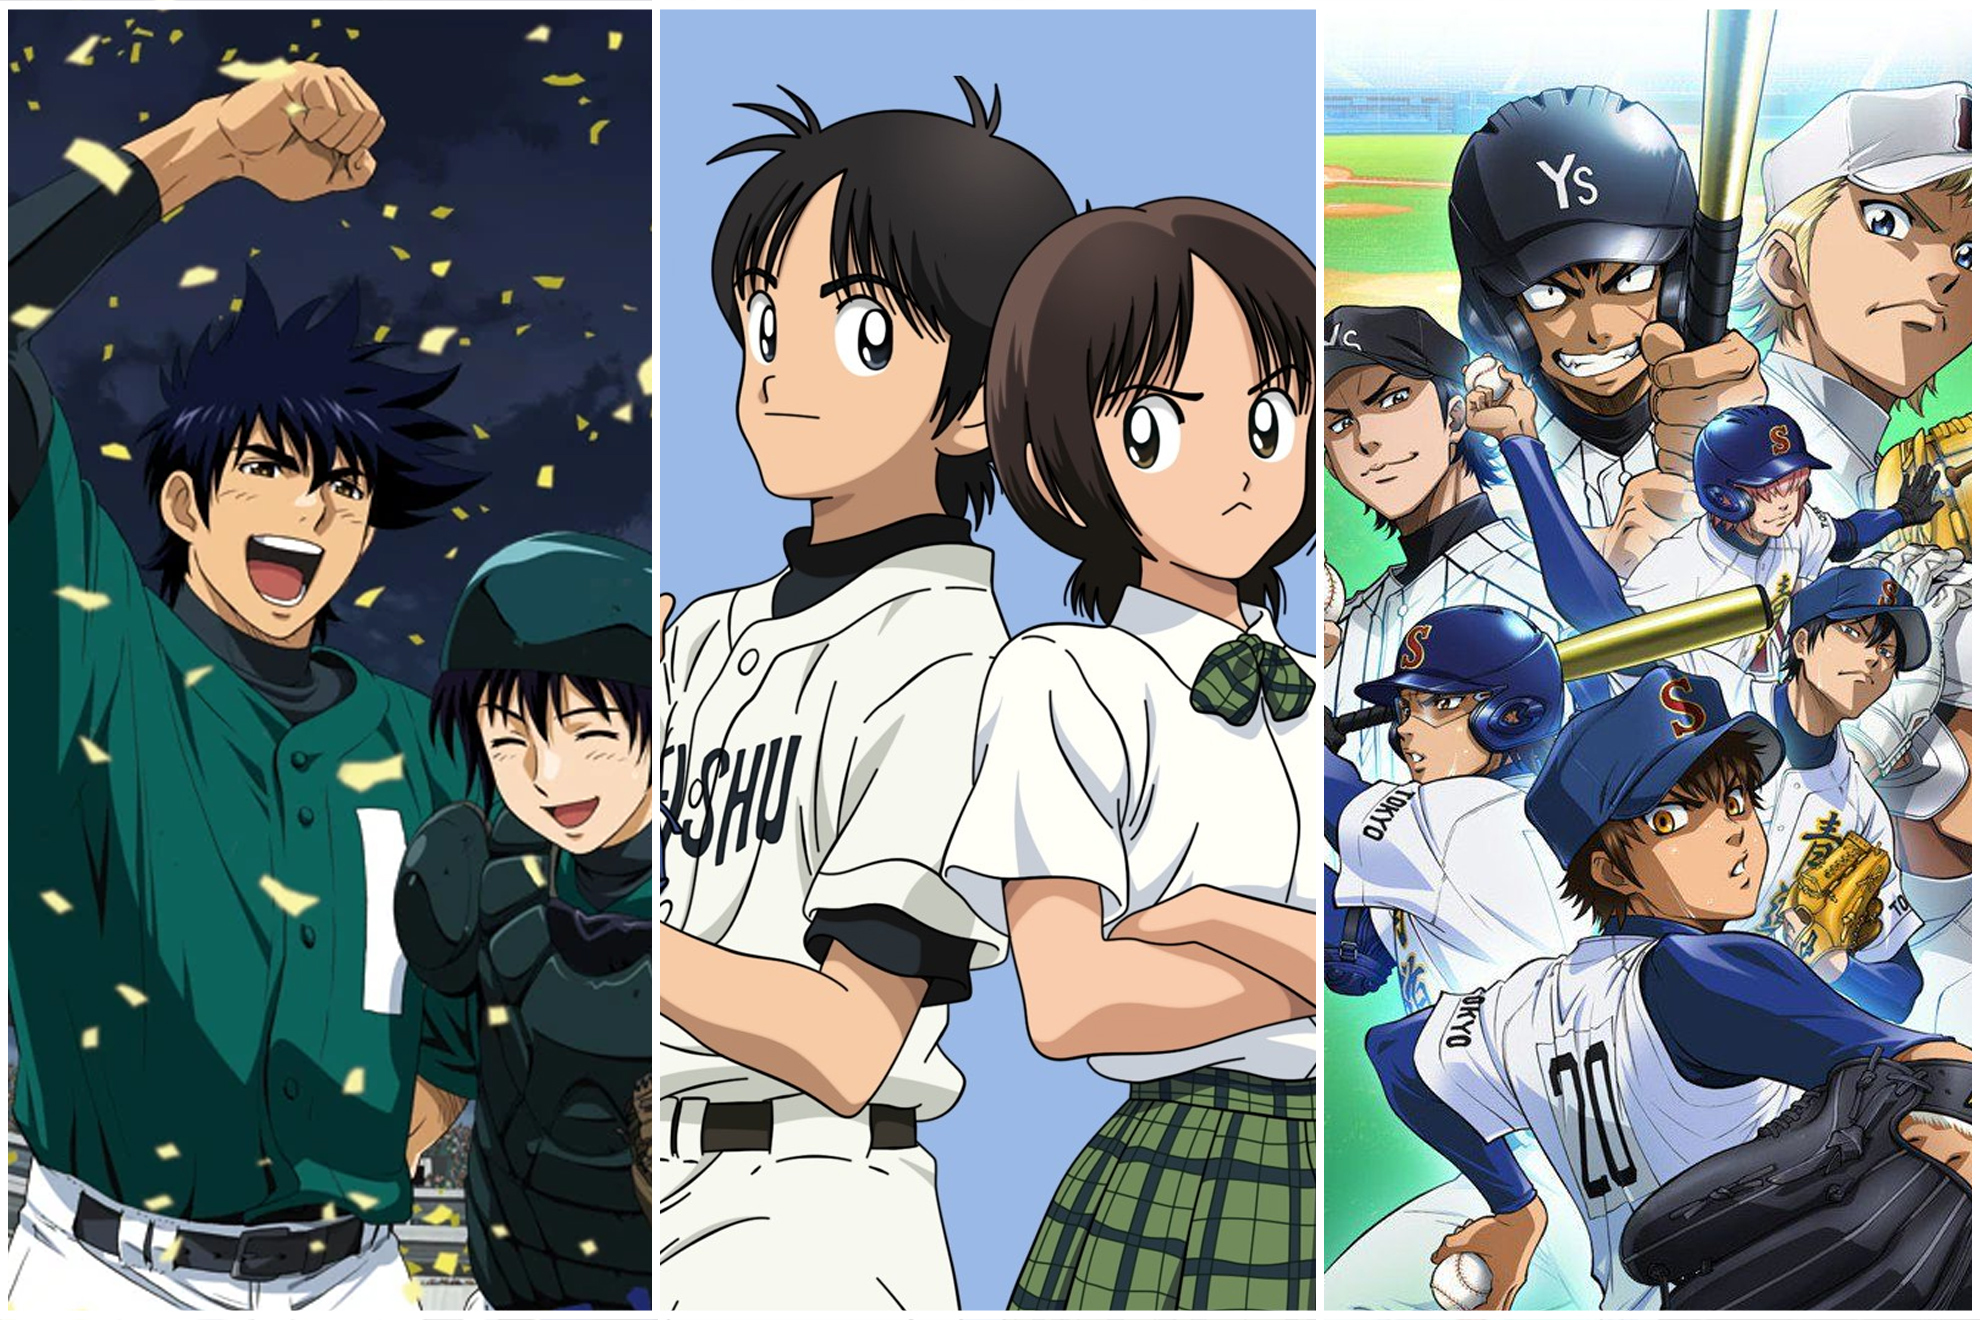 Estas son las mejores series anime de bisbol: Cross Game, Major, Diamond no Ace...